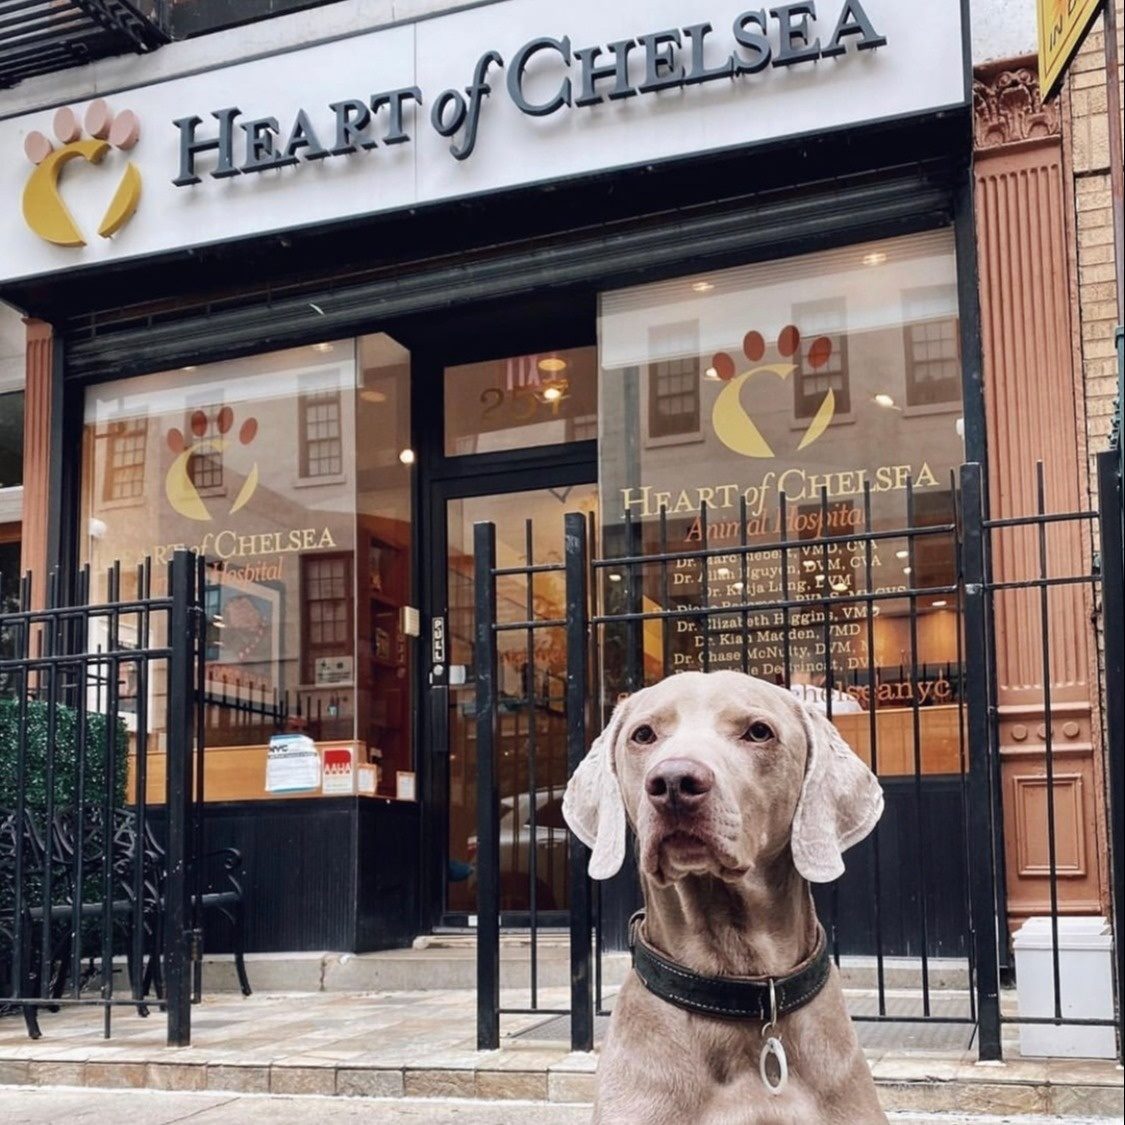 Heart of Chelsea Veterinary Group (Lower East Side)